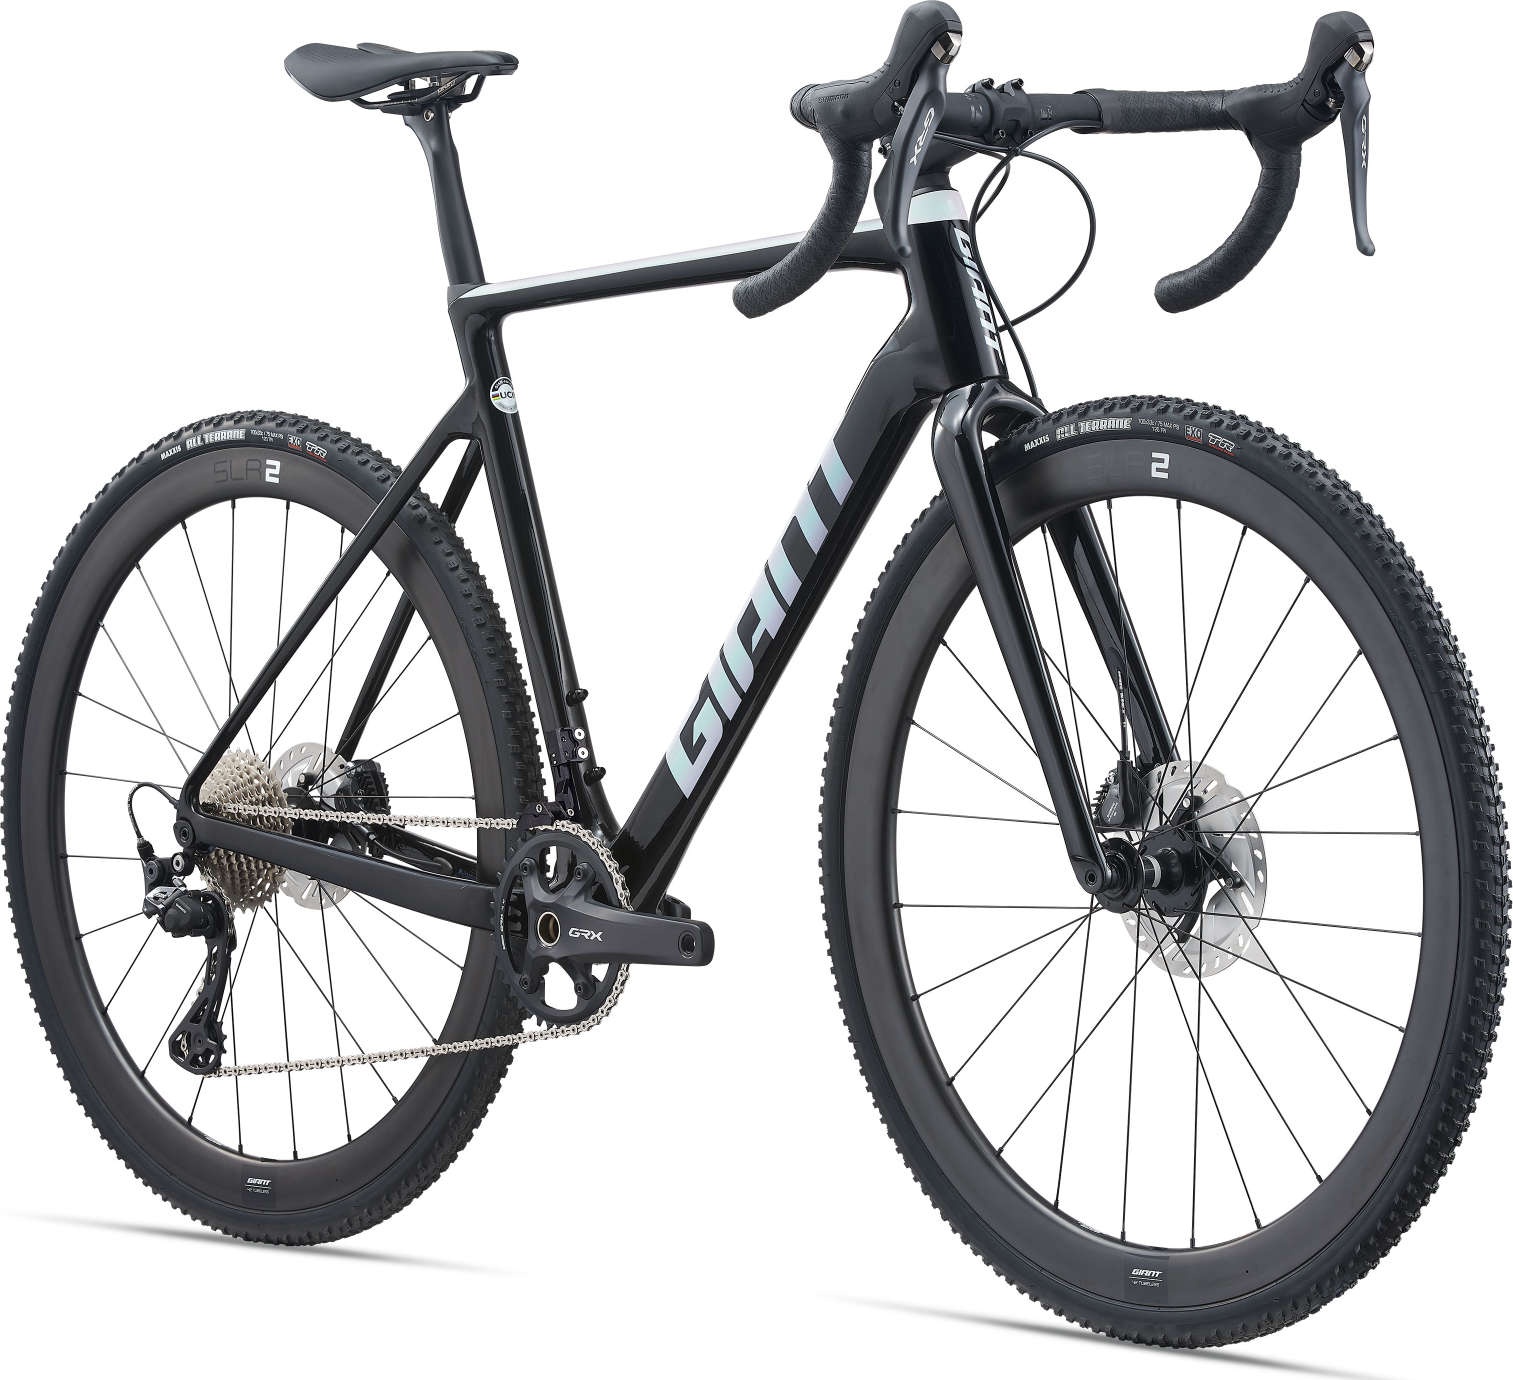 Cykler - Racercykler - Giant TCX Advanced Pro 1 2023 - Grå/Sort